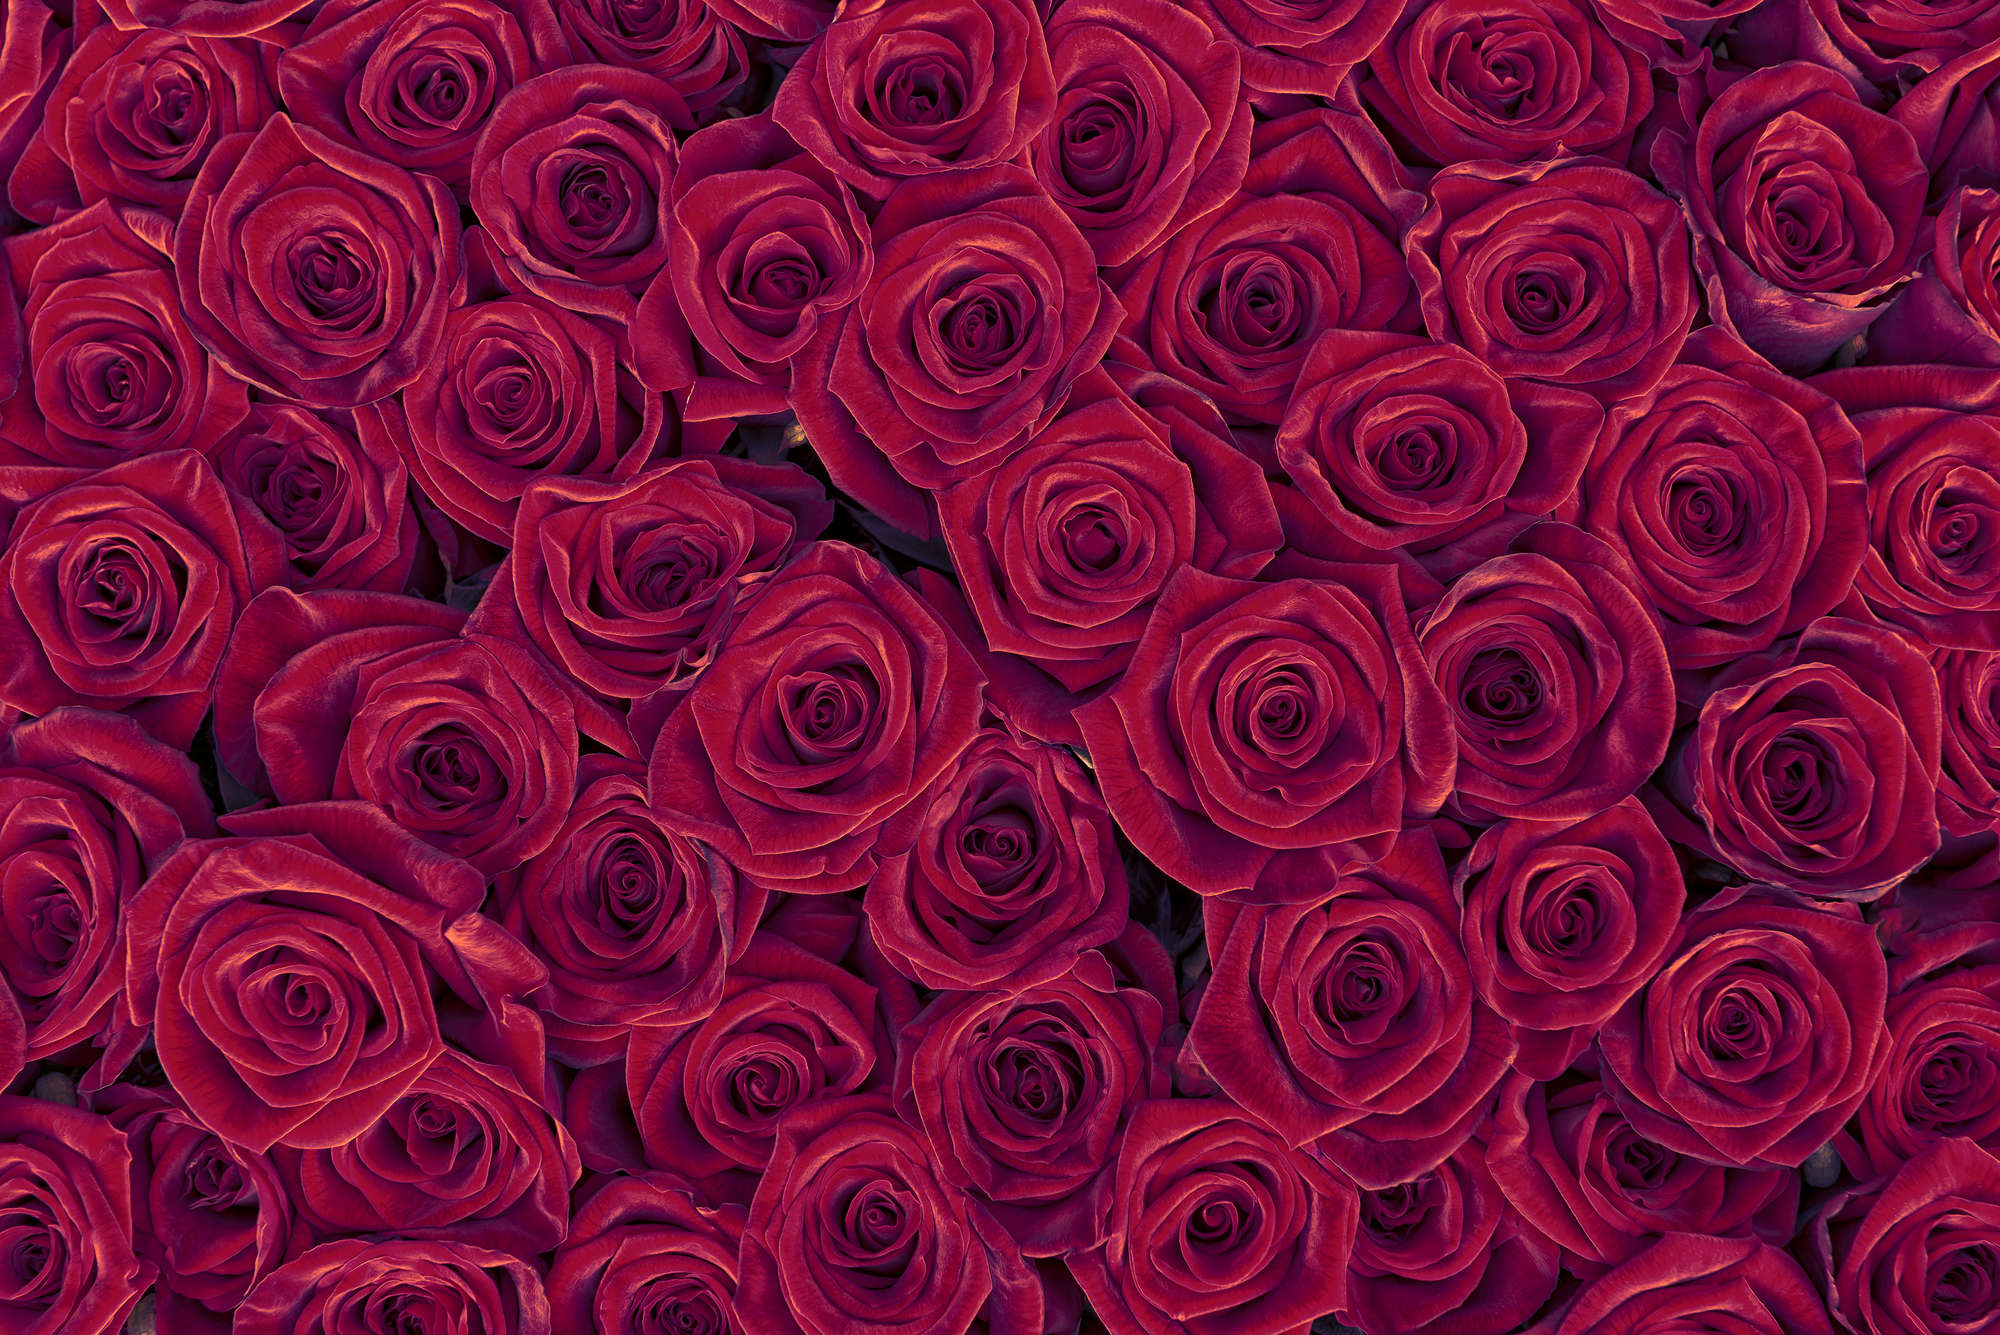             Piante Carta da parati Rose rosse su vello liscio madreperlato
        